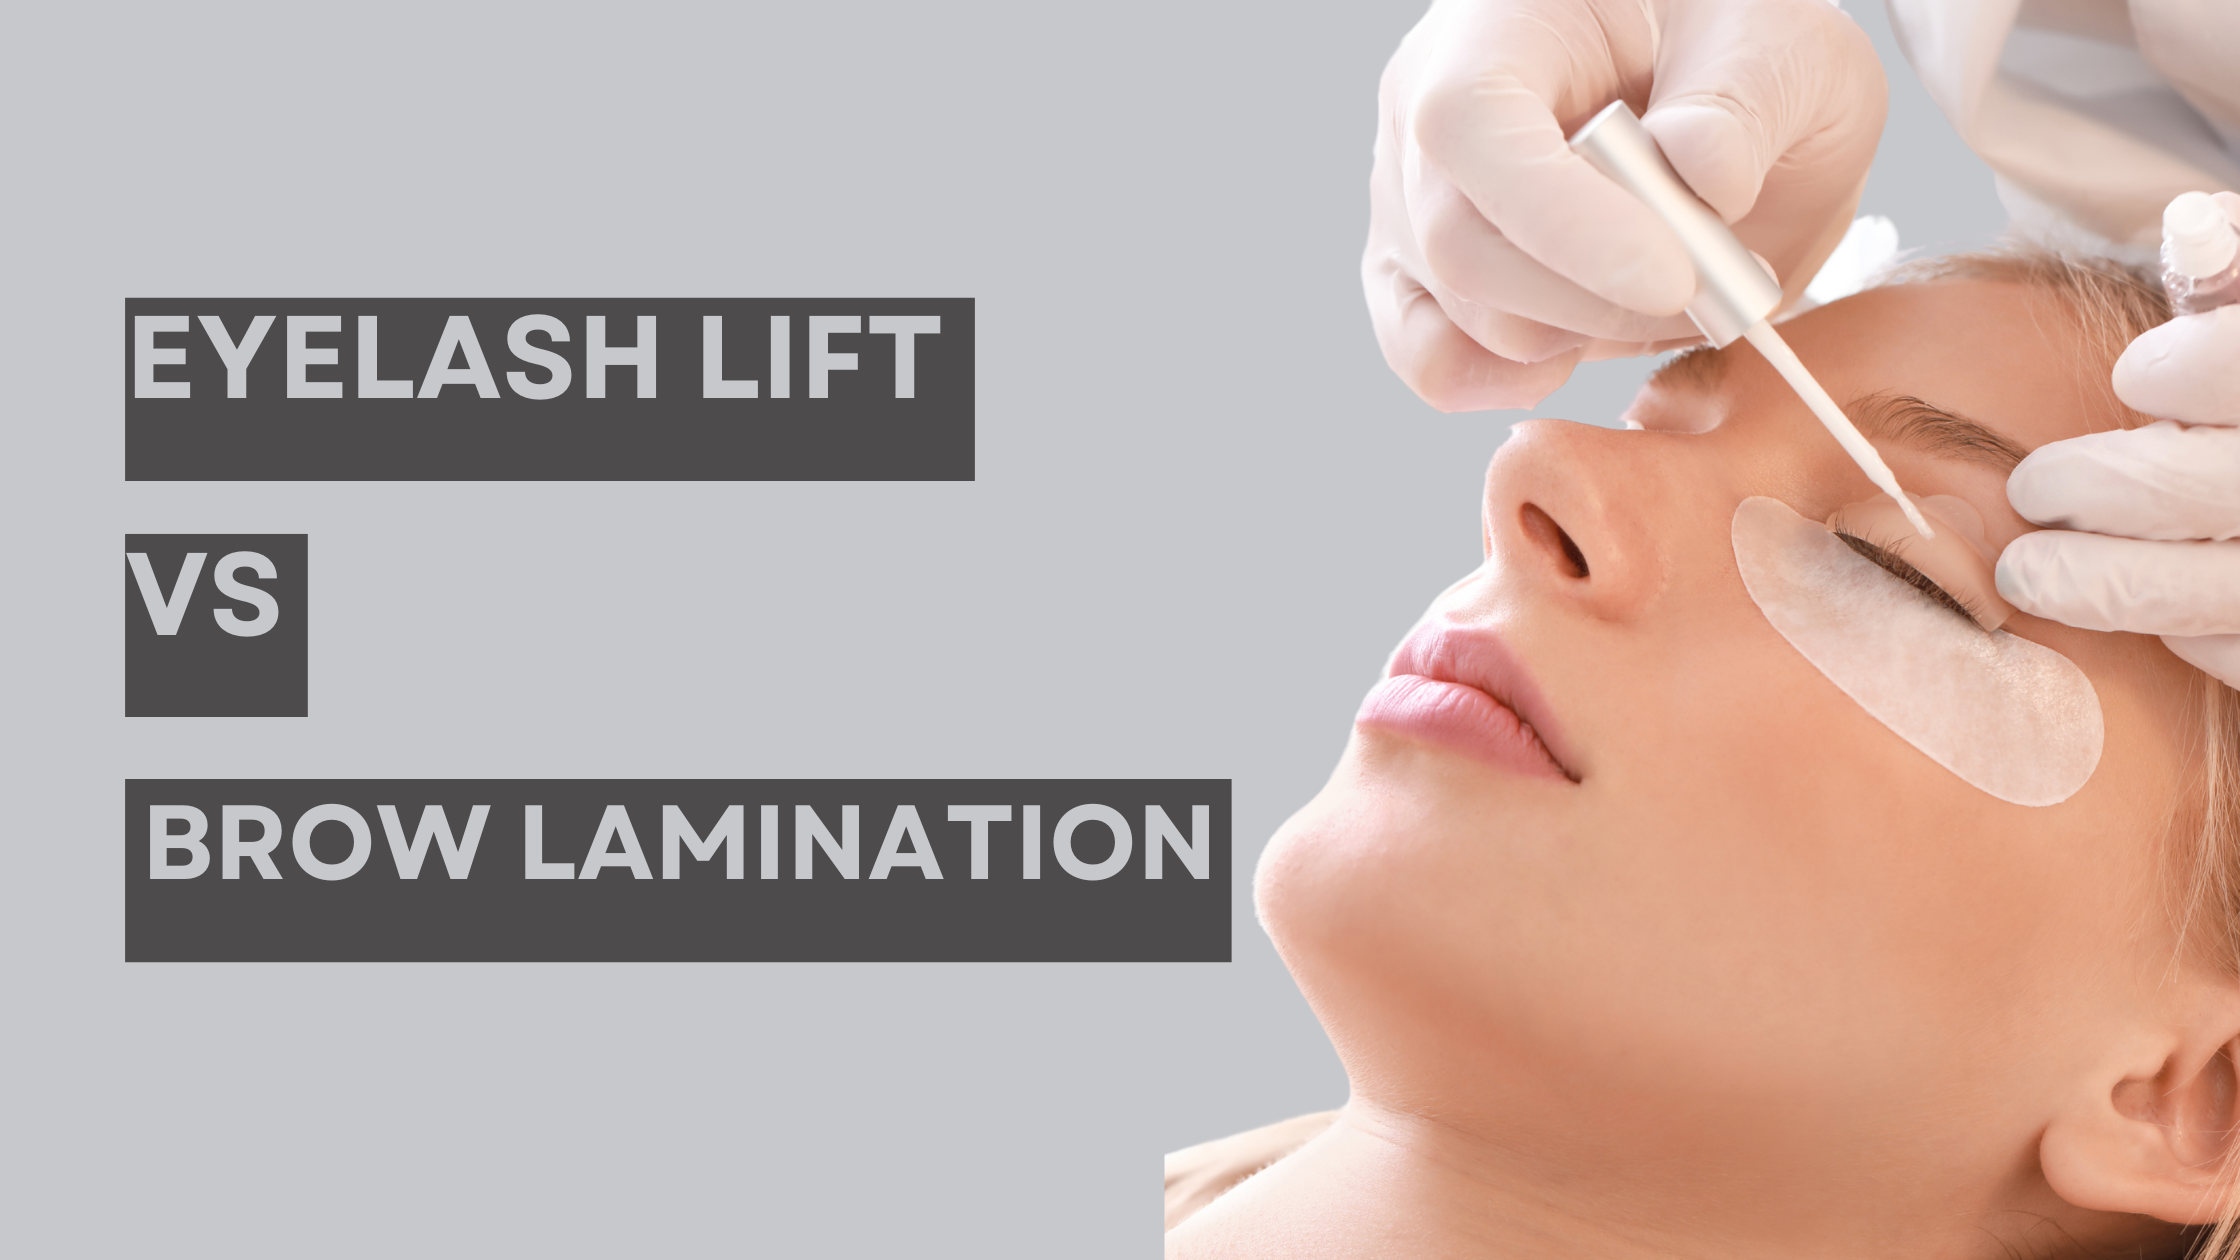 Eyelash lift vs brow lamination